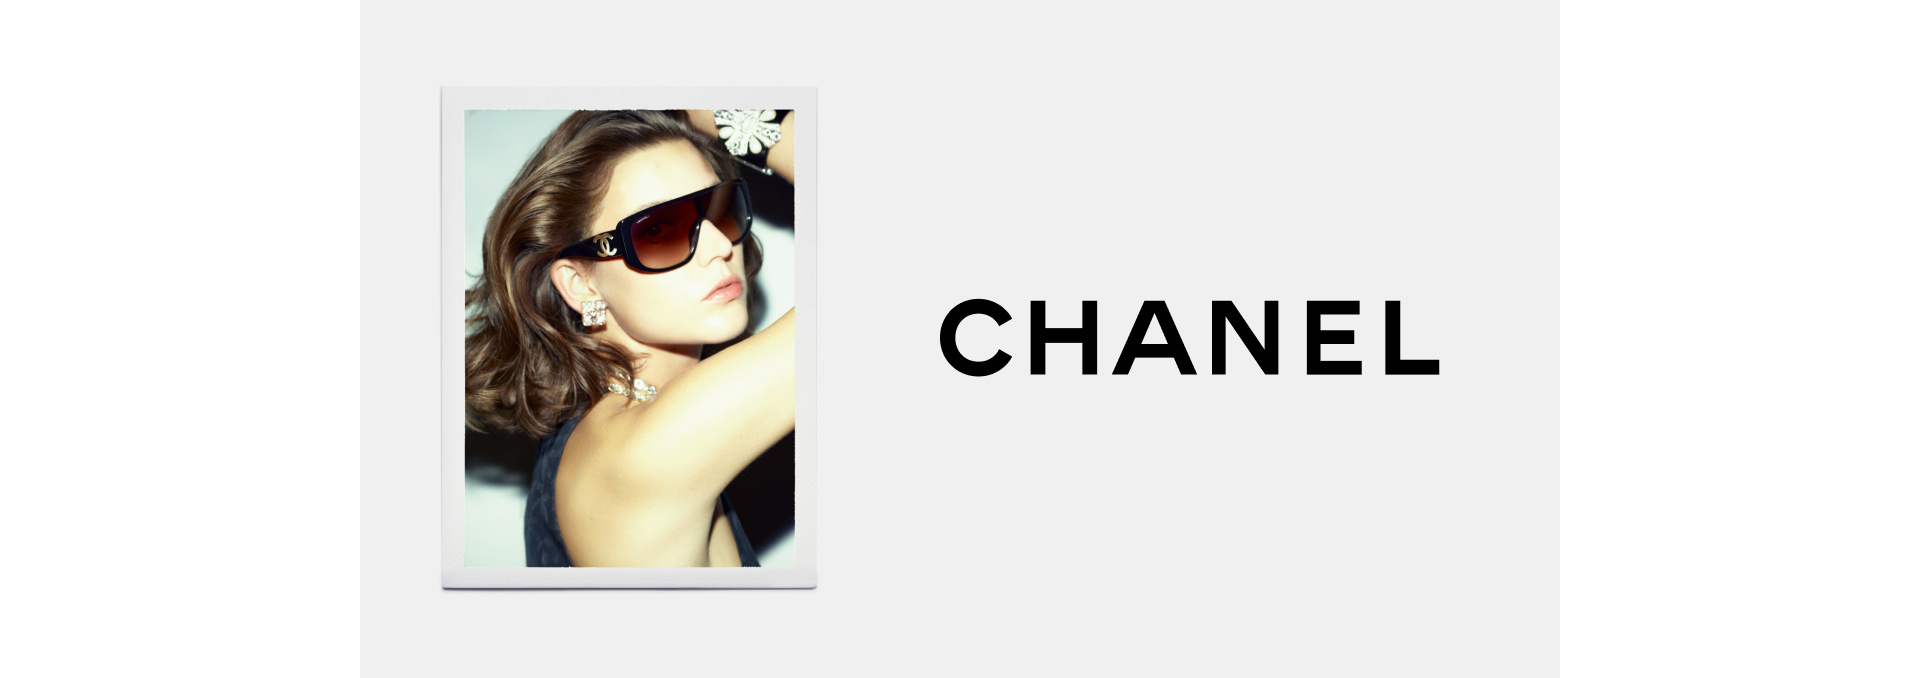 Fashion Eyewear Chanel - Linda Evangelista